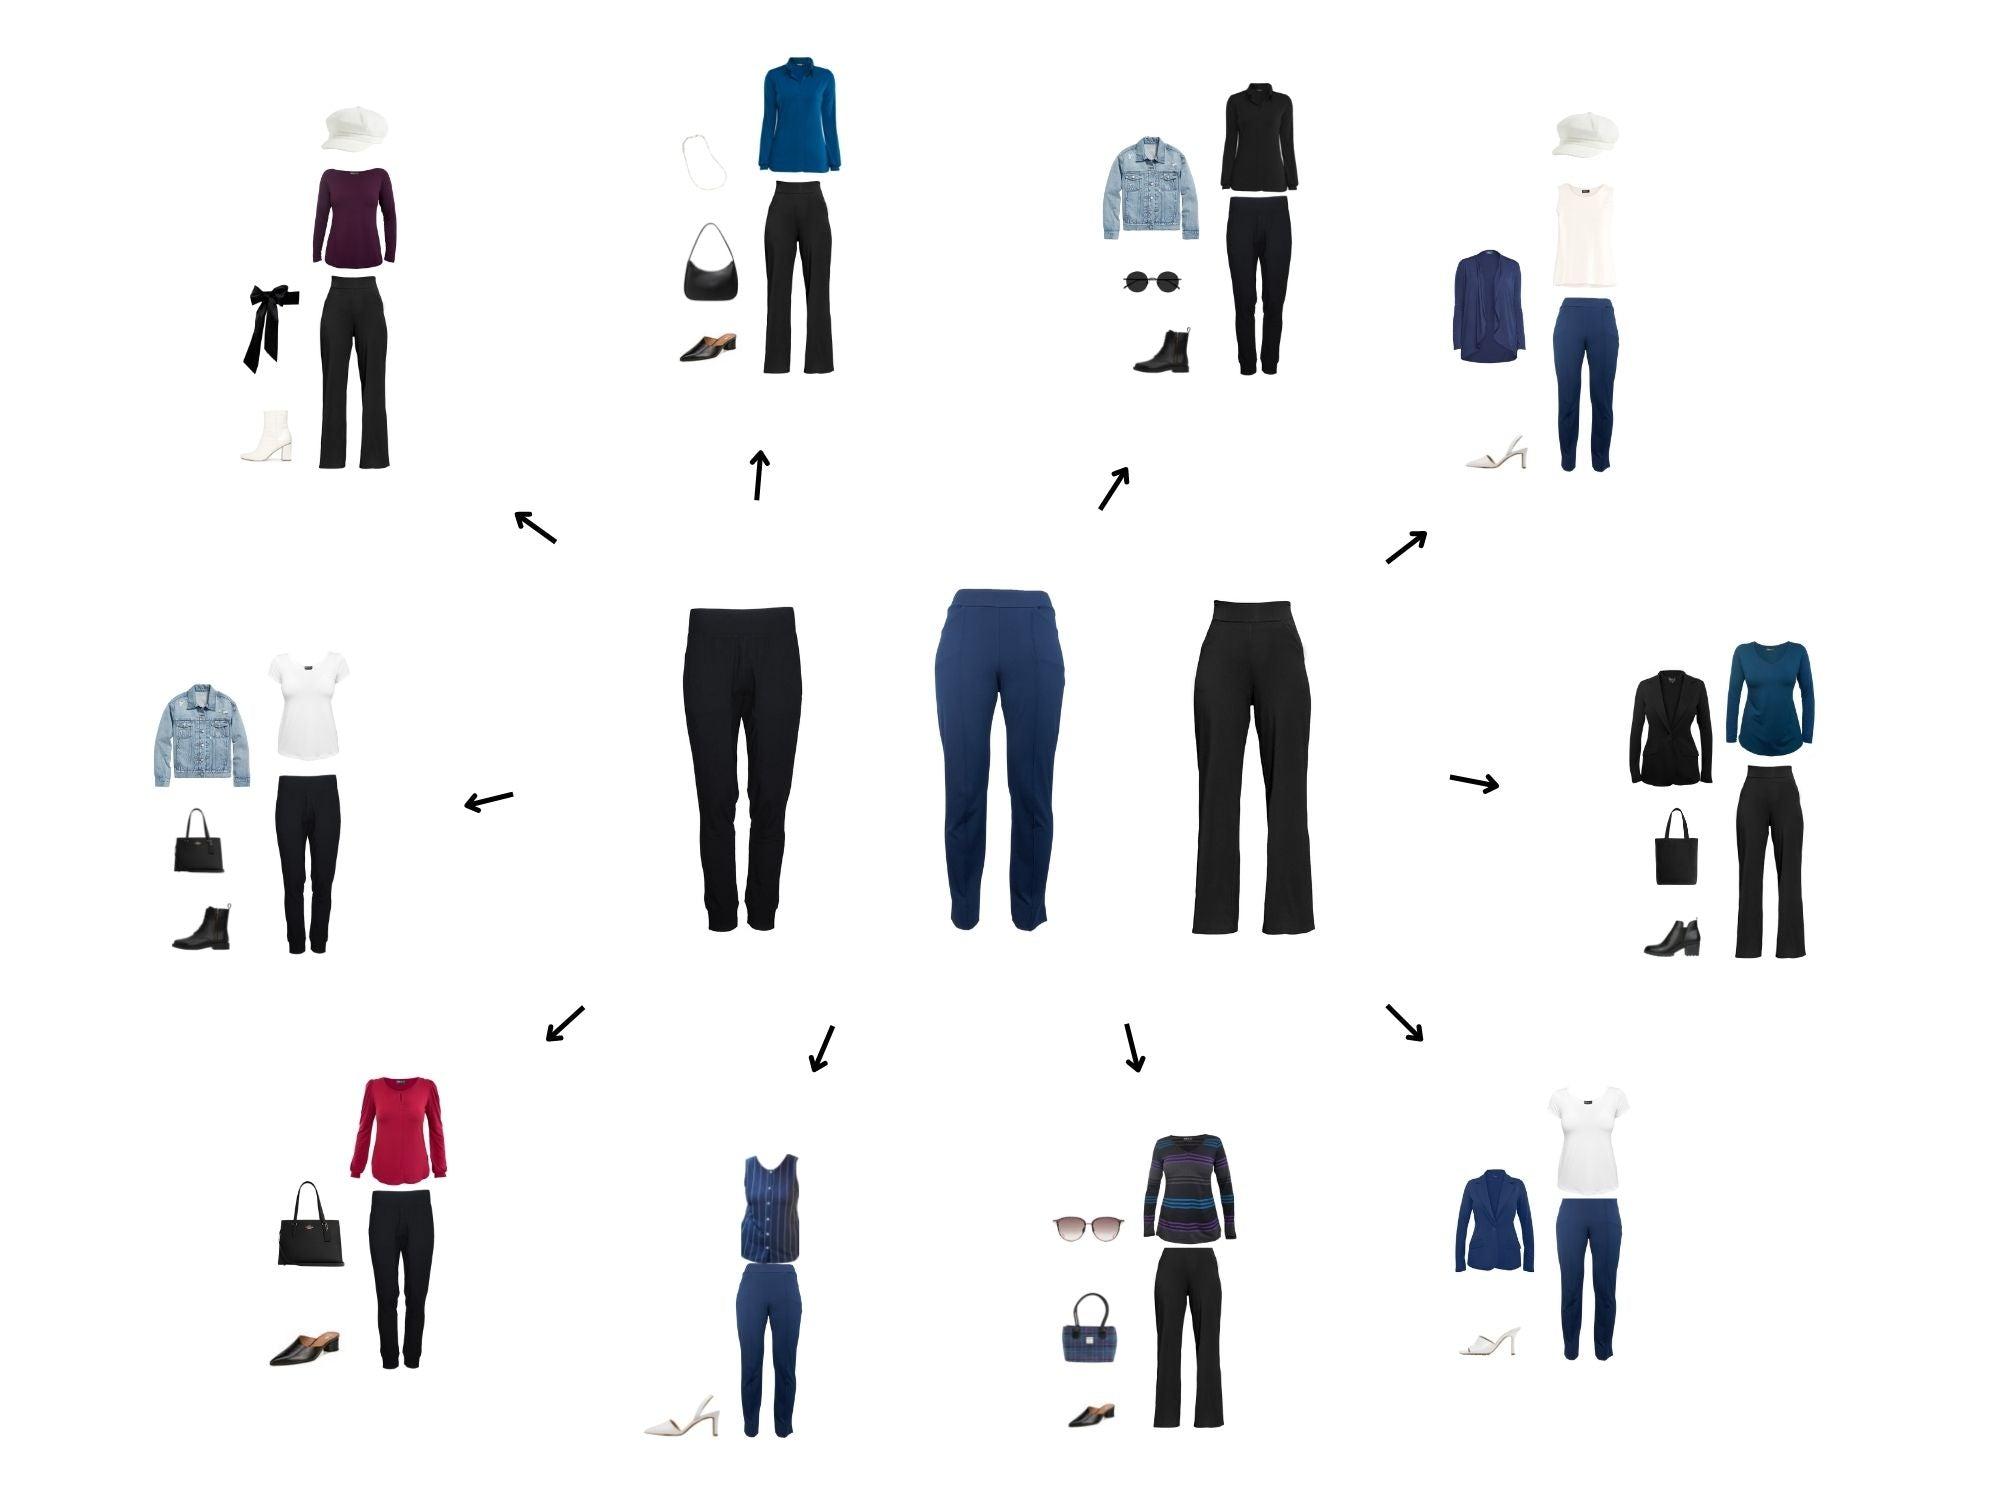 10 ways to style dress pants